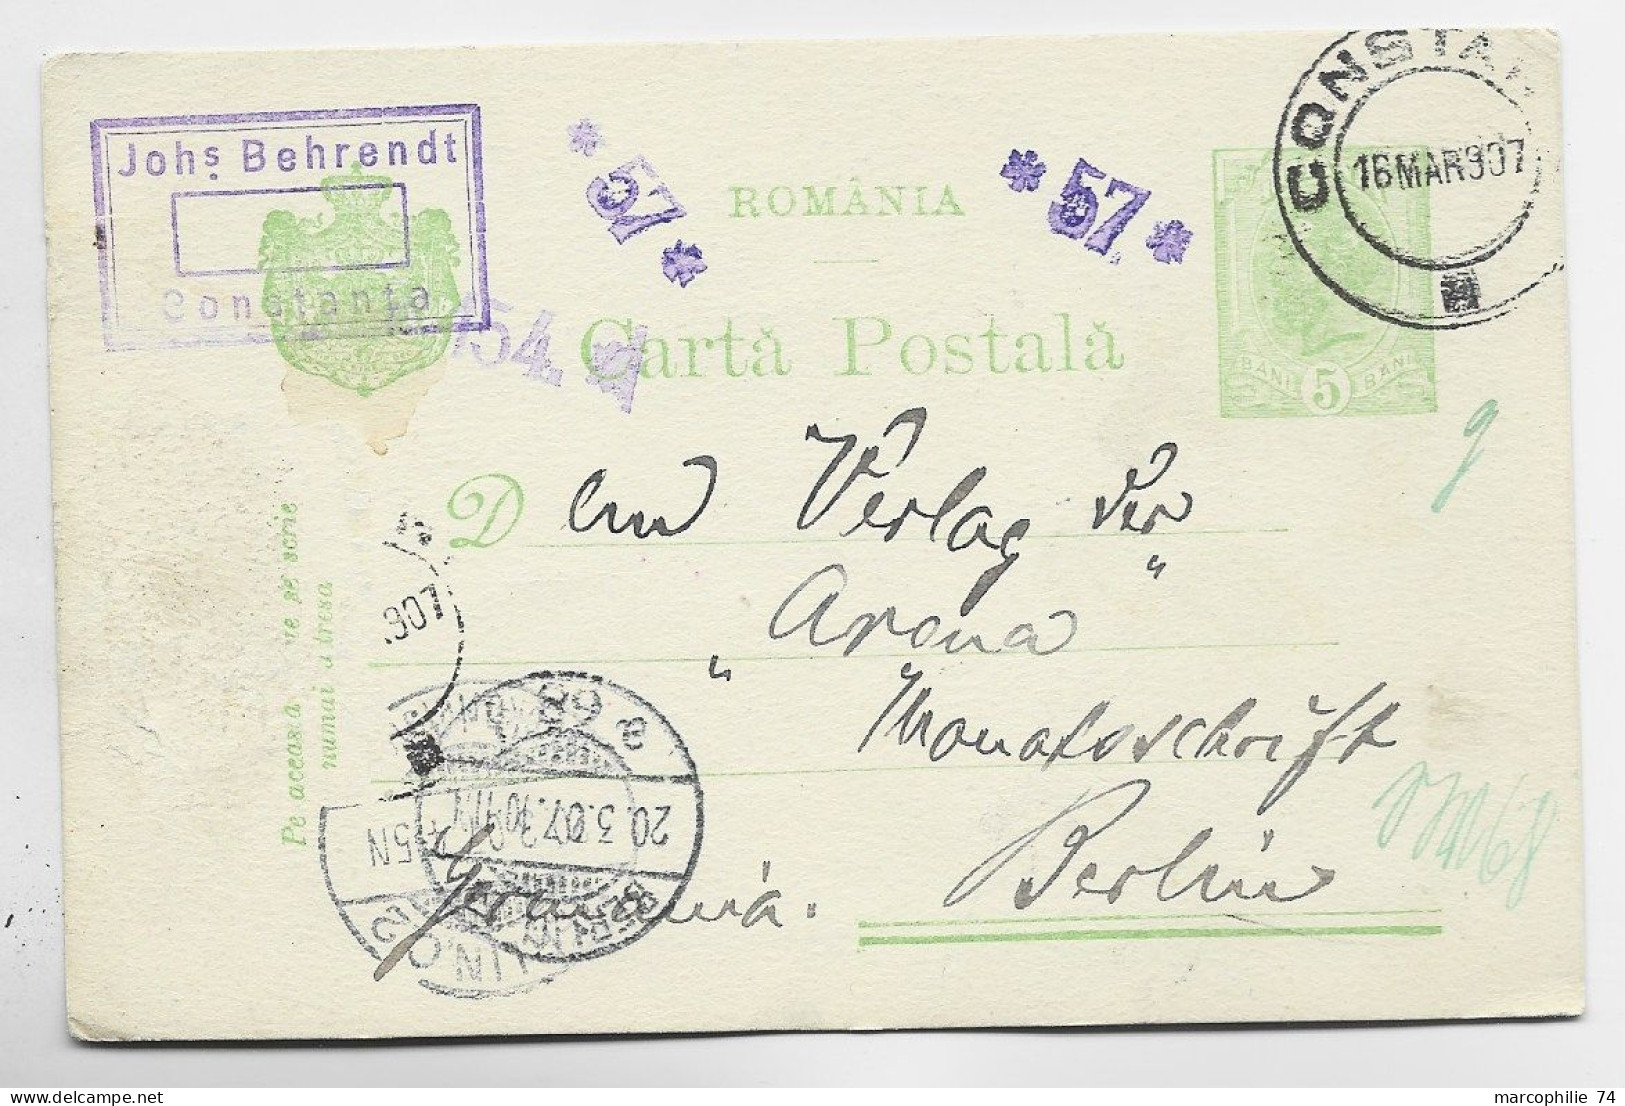 ROMANIA ROUMANIE 5 BANI CARTA POSTALA CONSTAN 16 MAR 1937 TO GERMANY - Brieven En Documenten